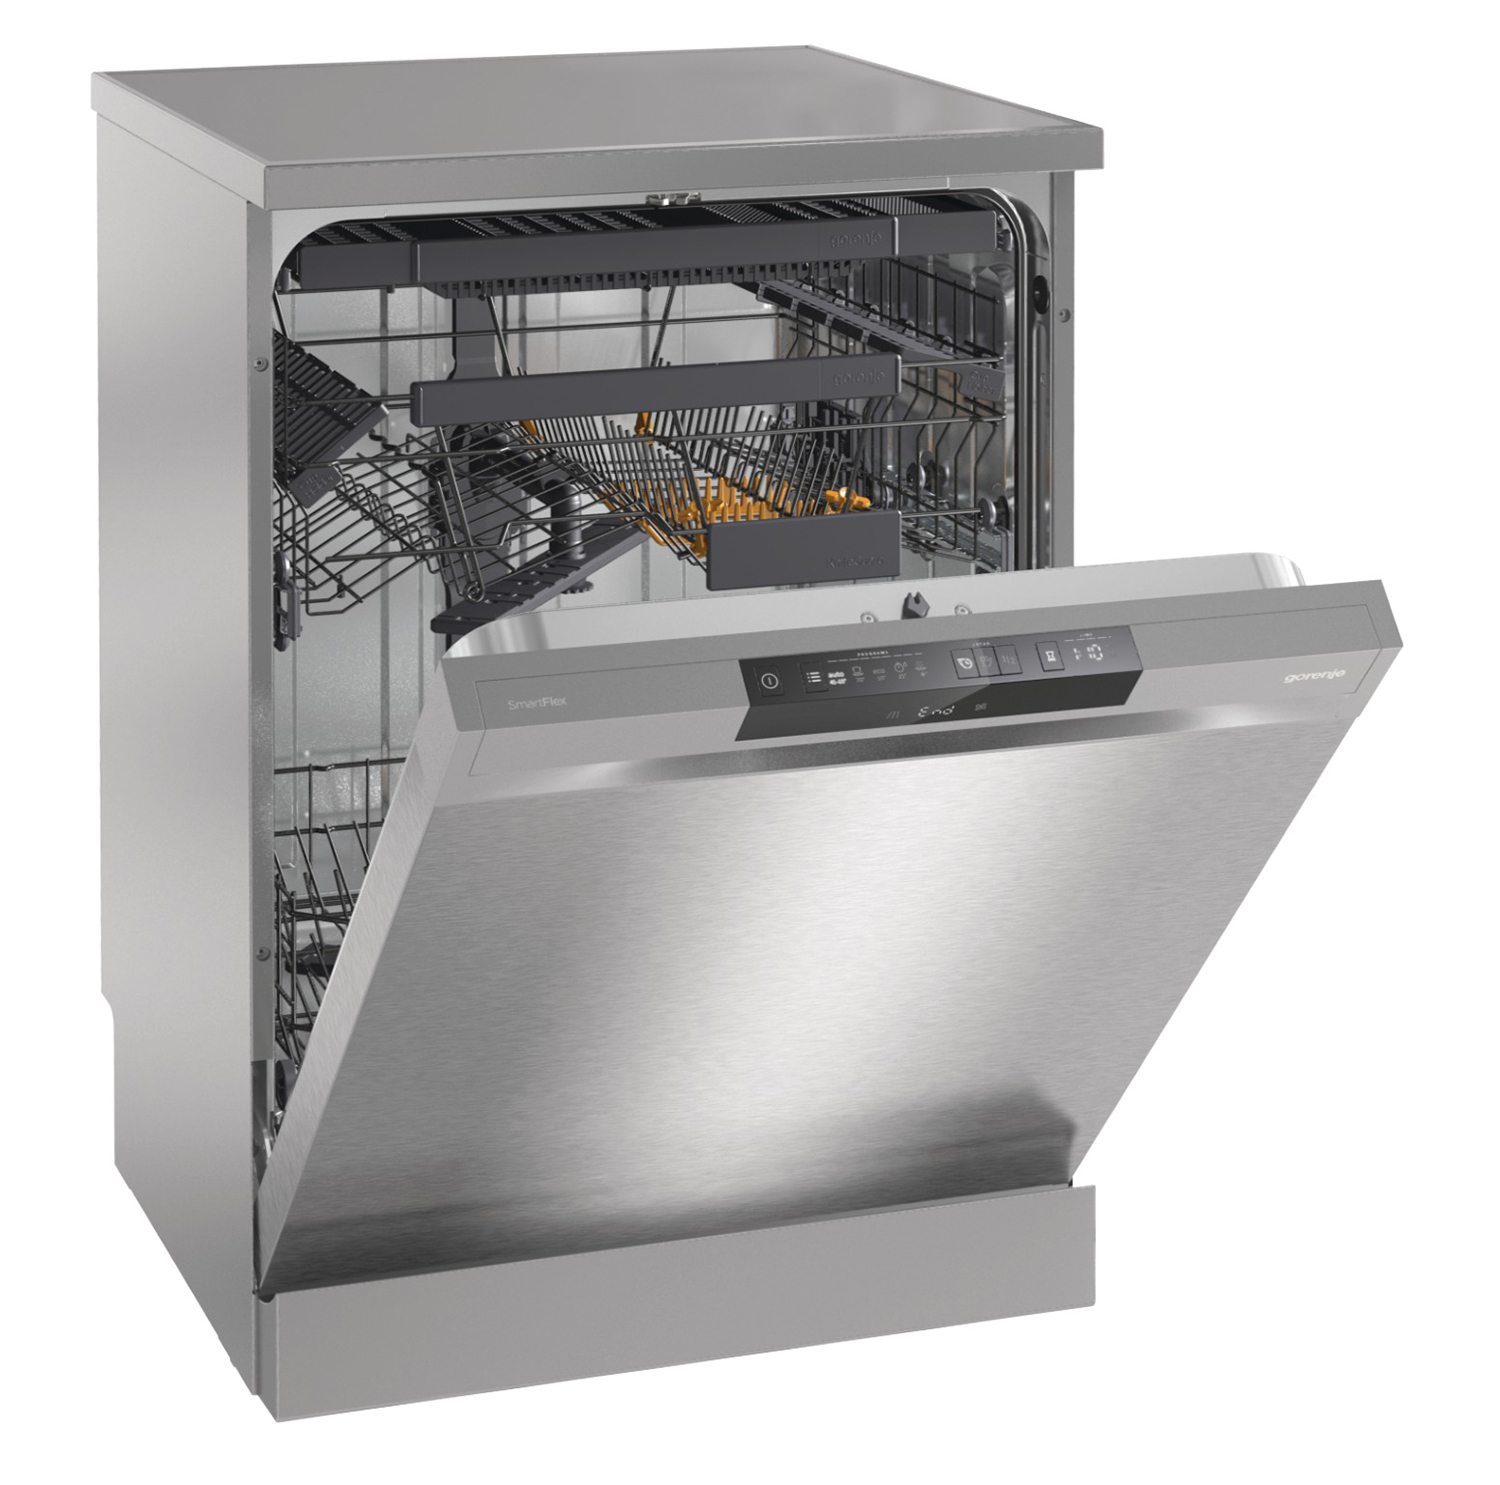 GS65160X dishwasher - Gorenje Freestanding dishwasher GS65160X